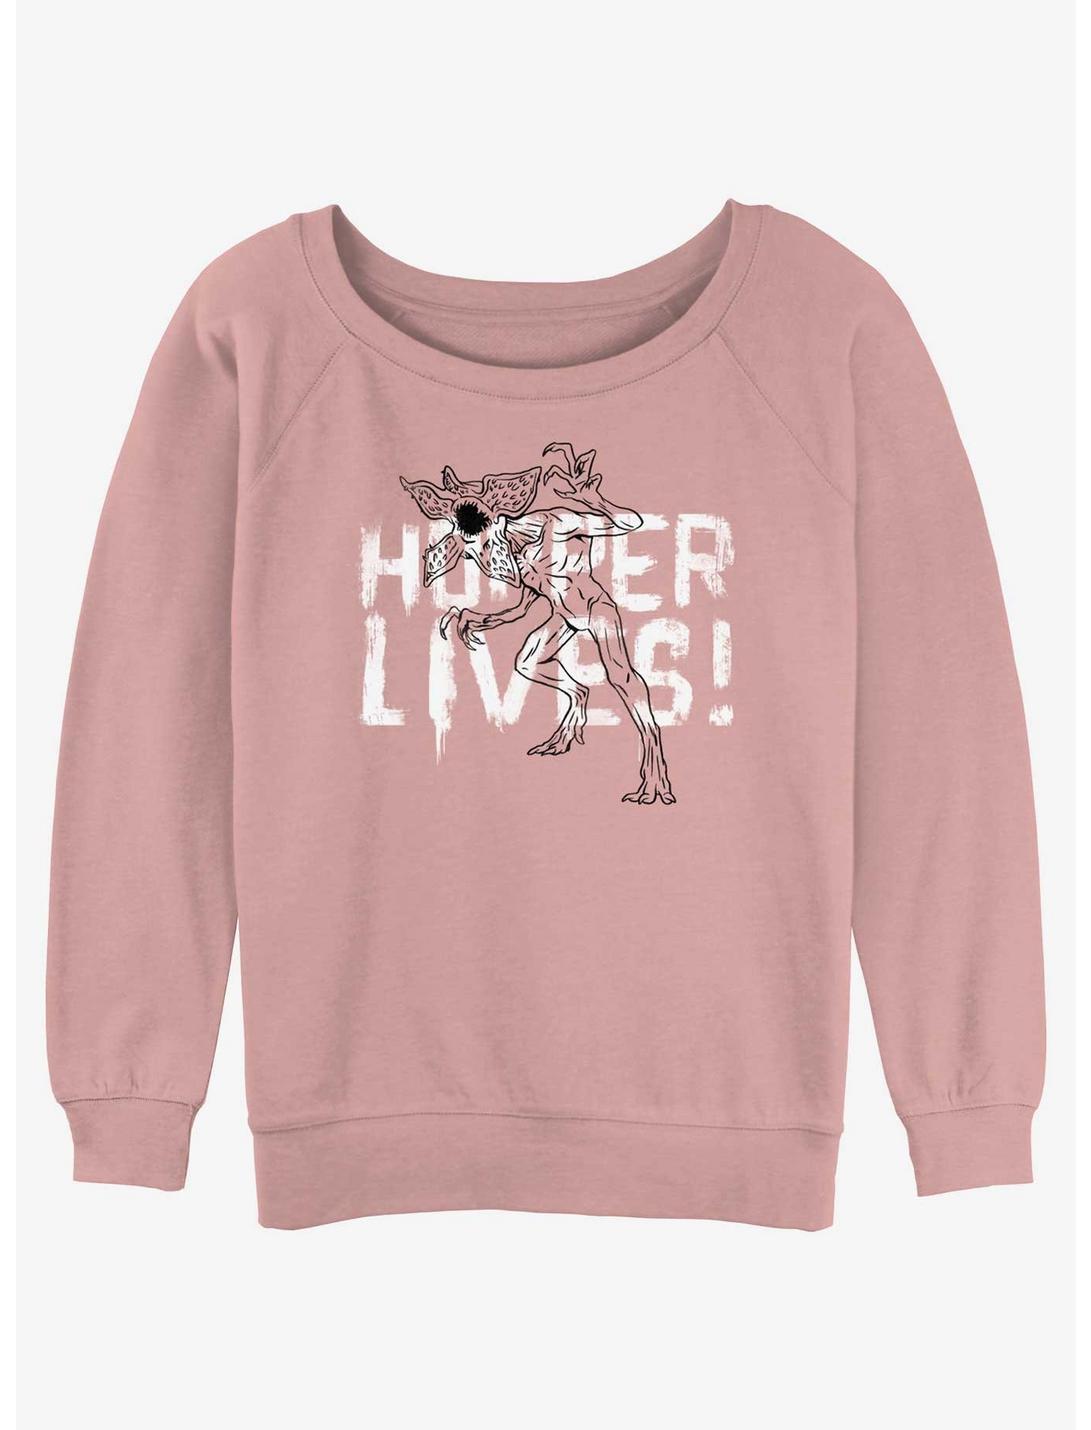 Stranger Things Hopper Lives Womens Slouchy Sweatshirt, DESERTPNK, hi-res